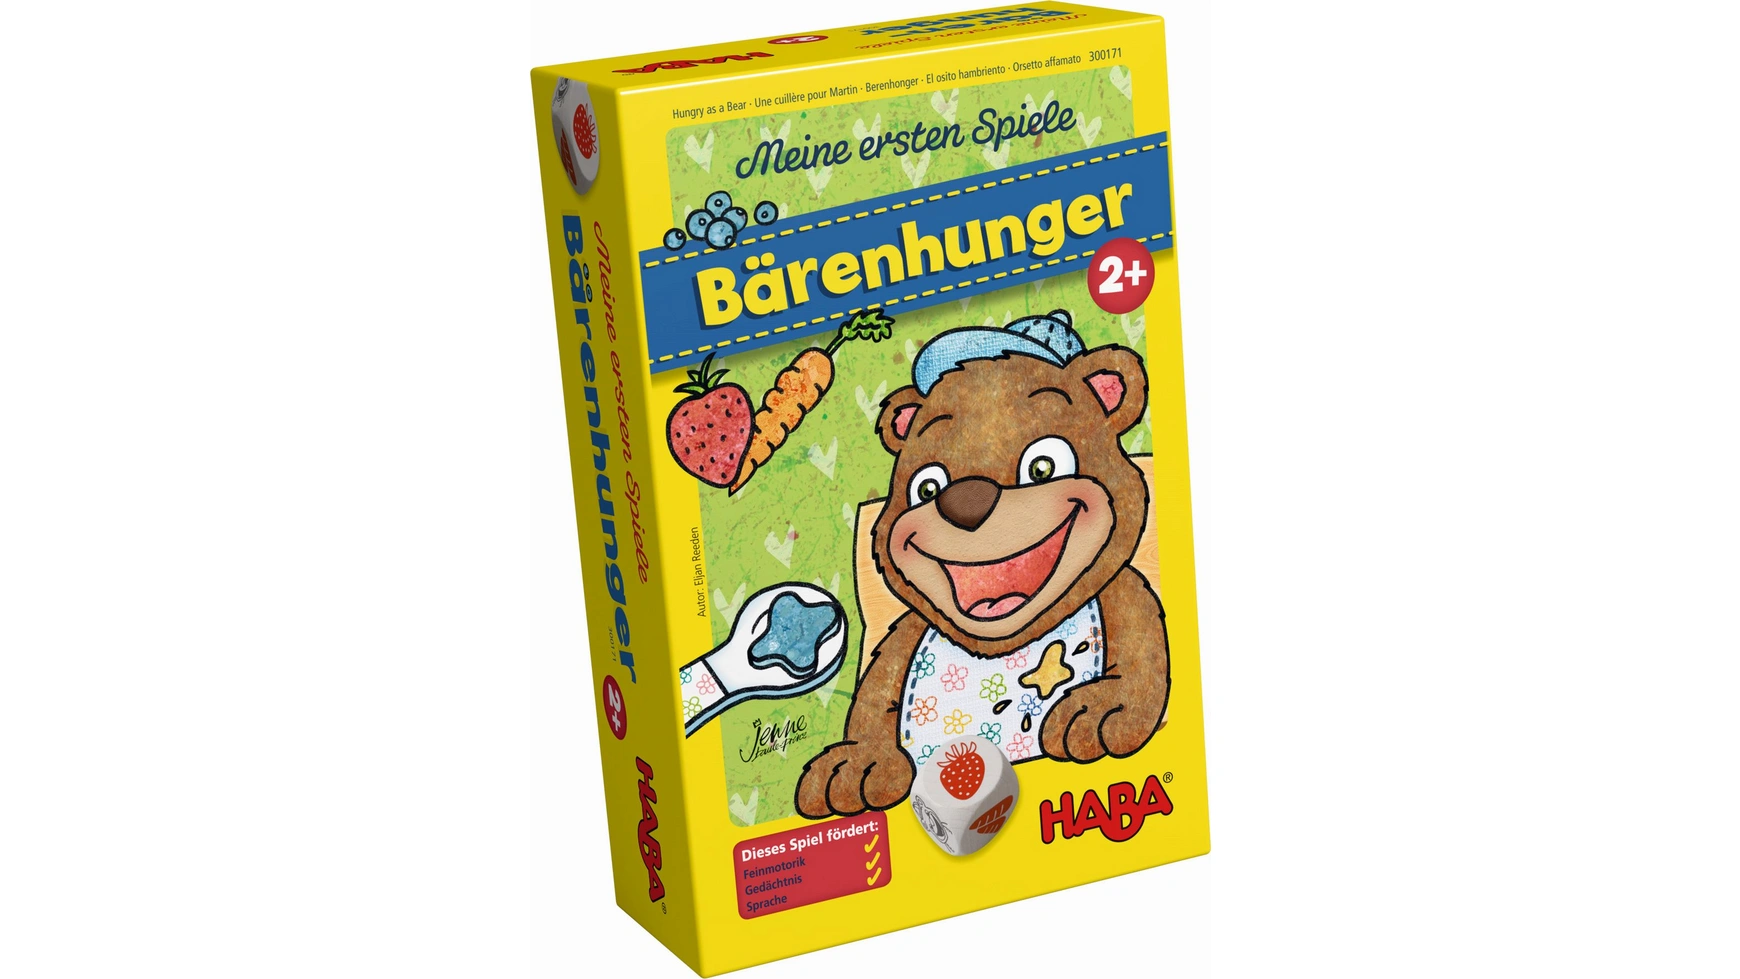 Мои первые игры bärenhunger Haba мои первые игры сборник игр haba